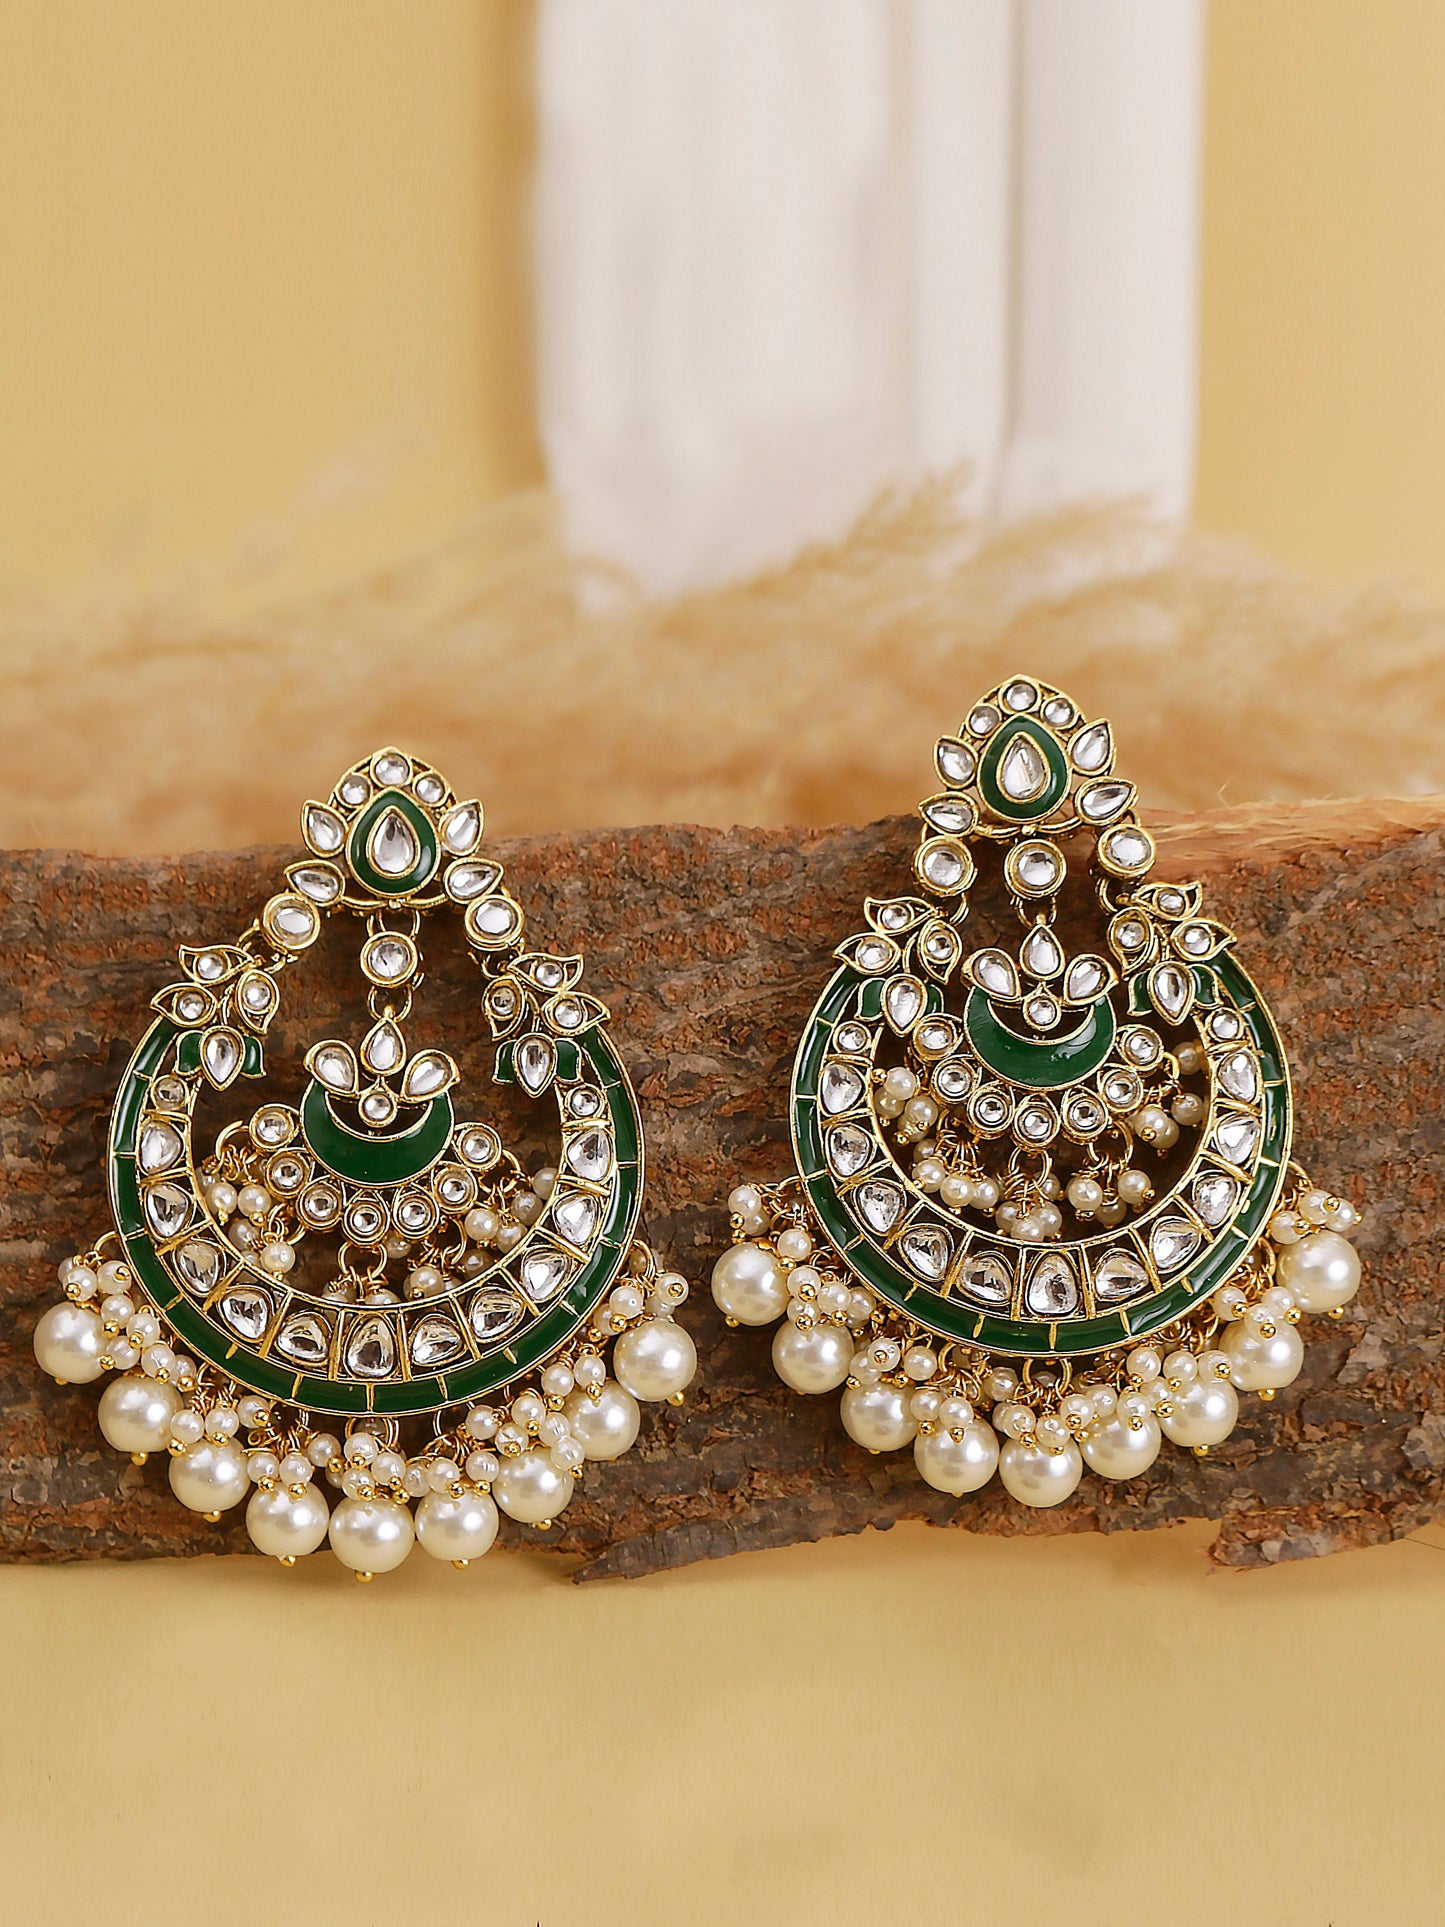 Swisni Alloy Golden Earrings with White Beads For Women|For Girls|Gifting|Anniversary|Birthday|Girlfriend